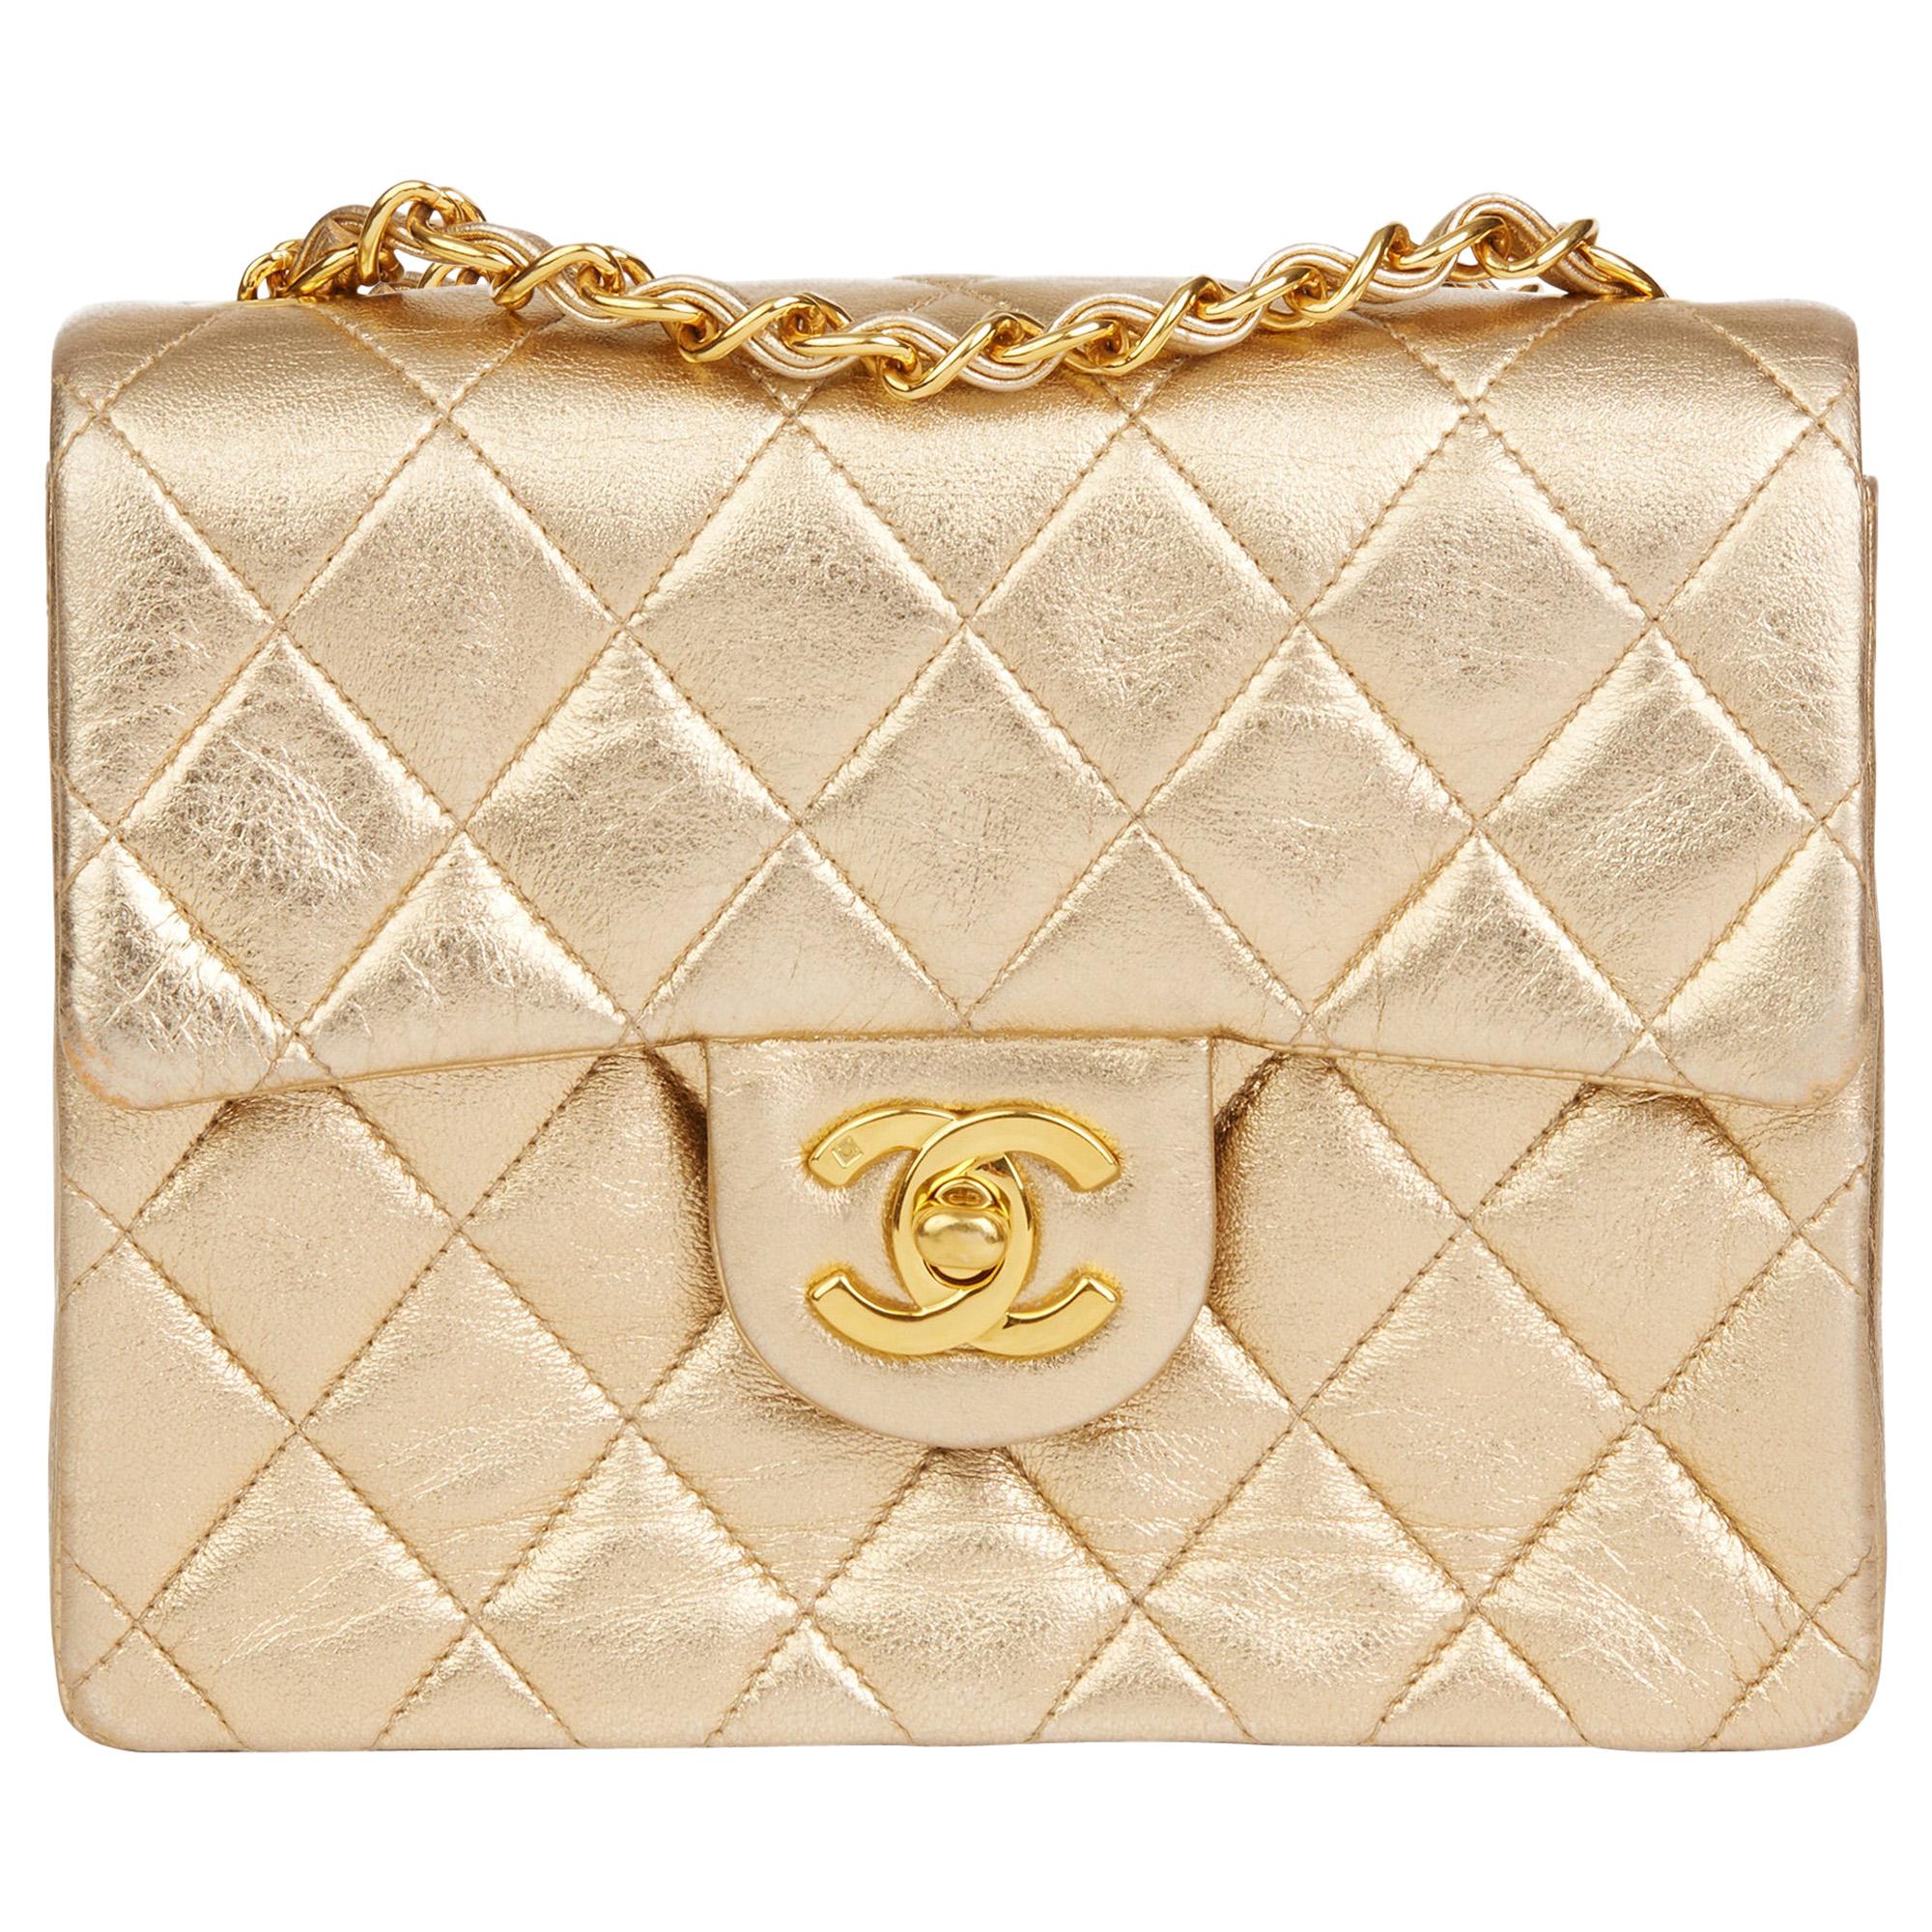 1994 Chanel Gold Metallic Lambskin Vintage Mini Flap Bag